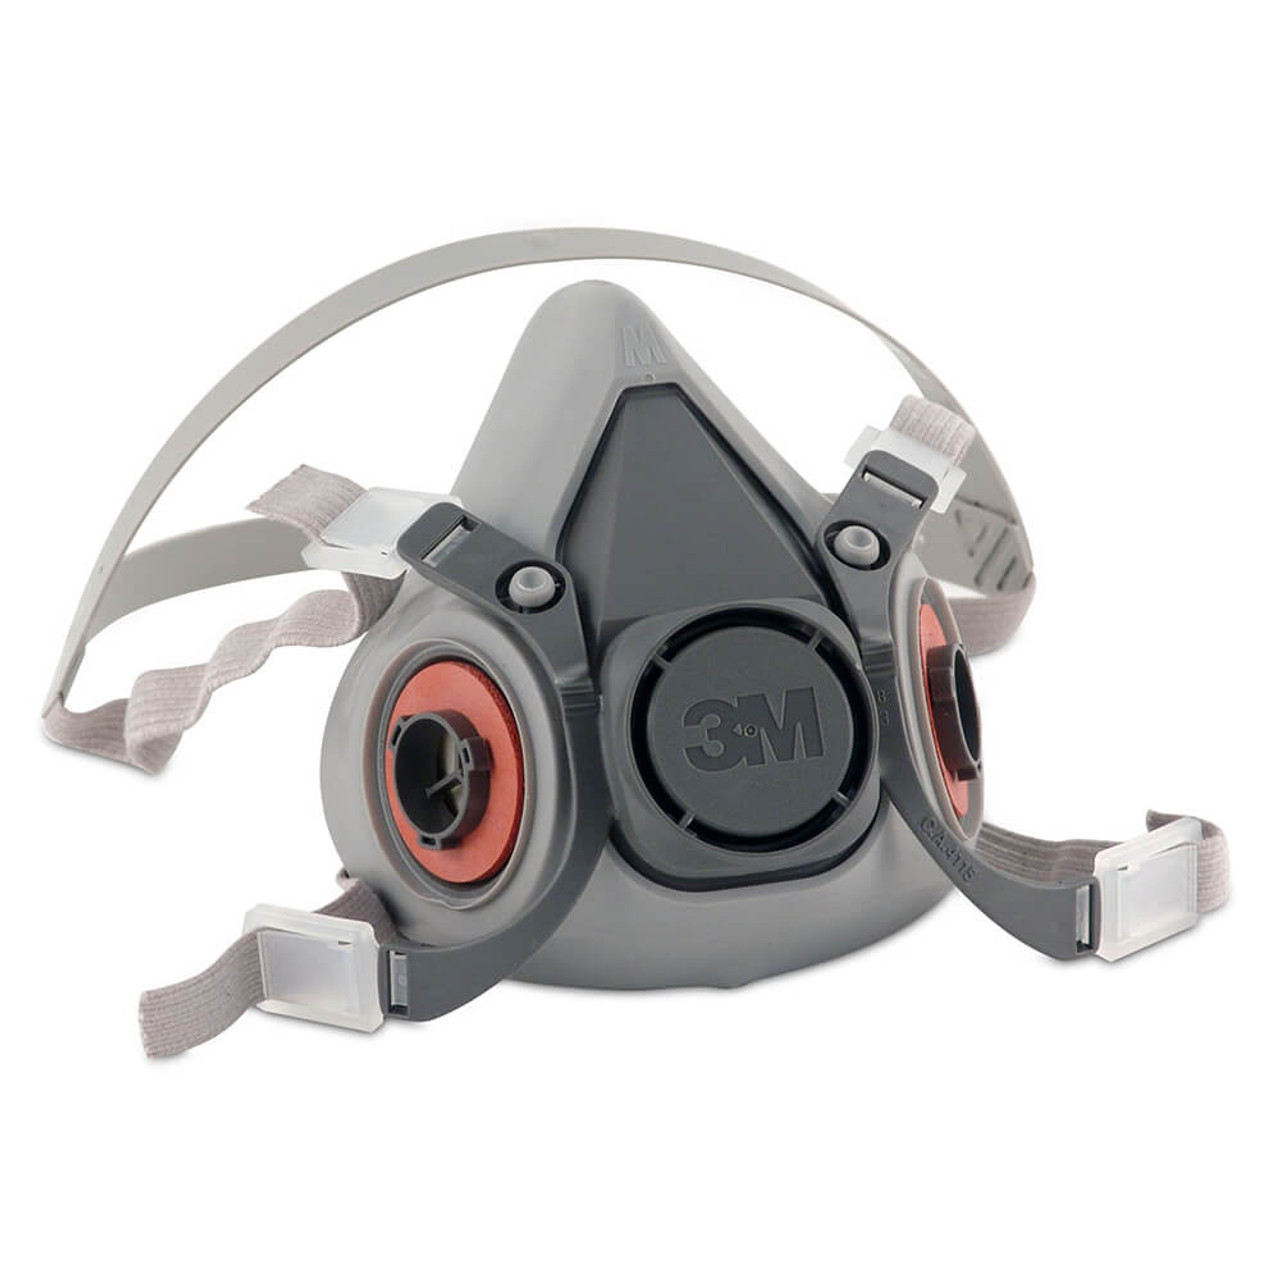 professional 3m respirator series